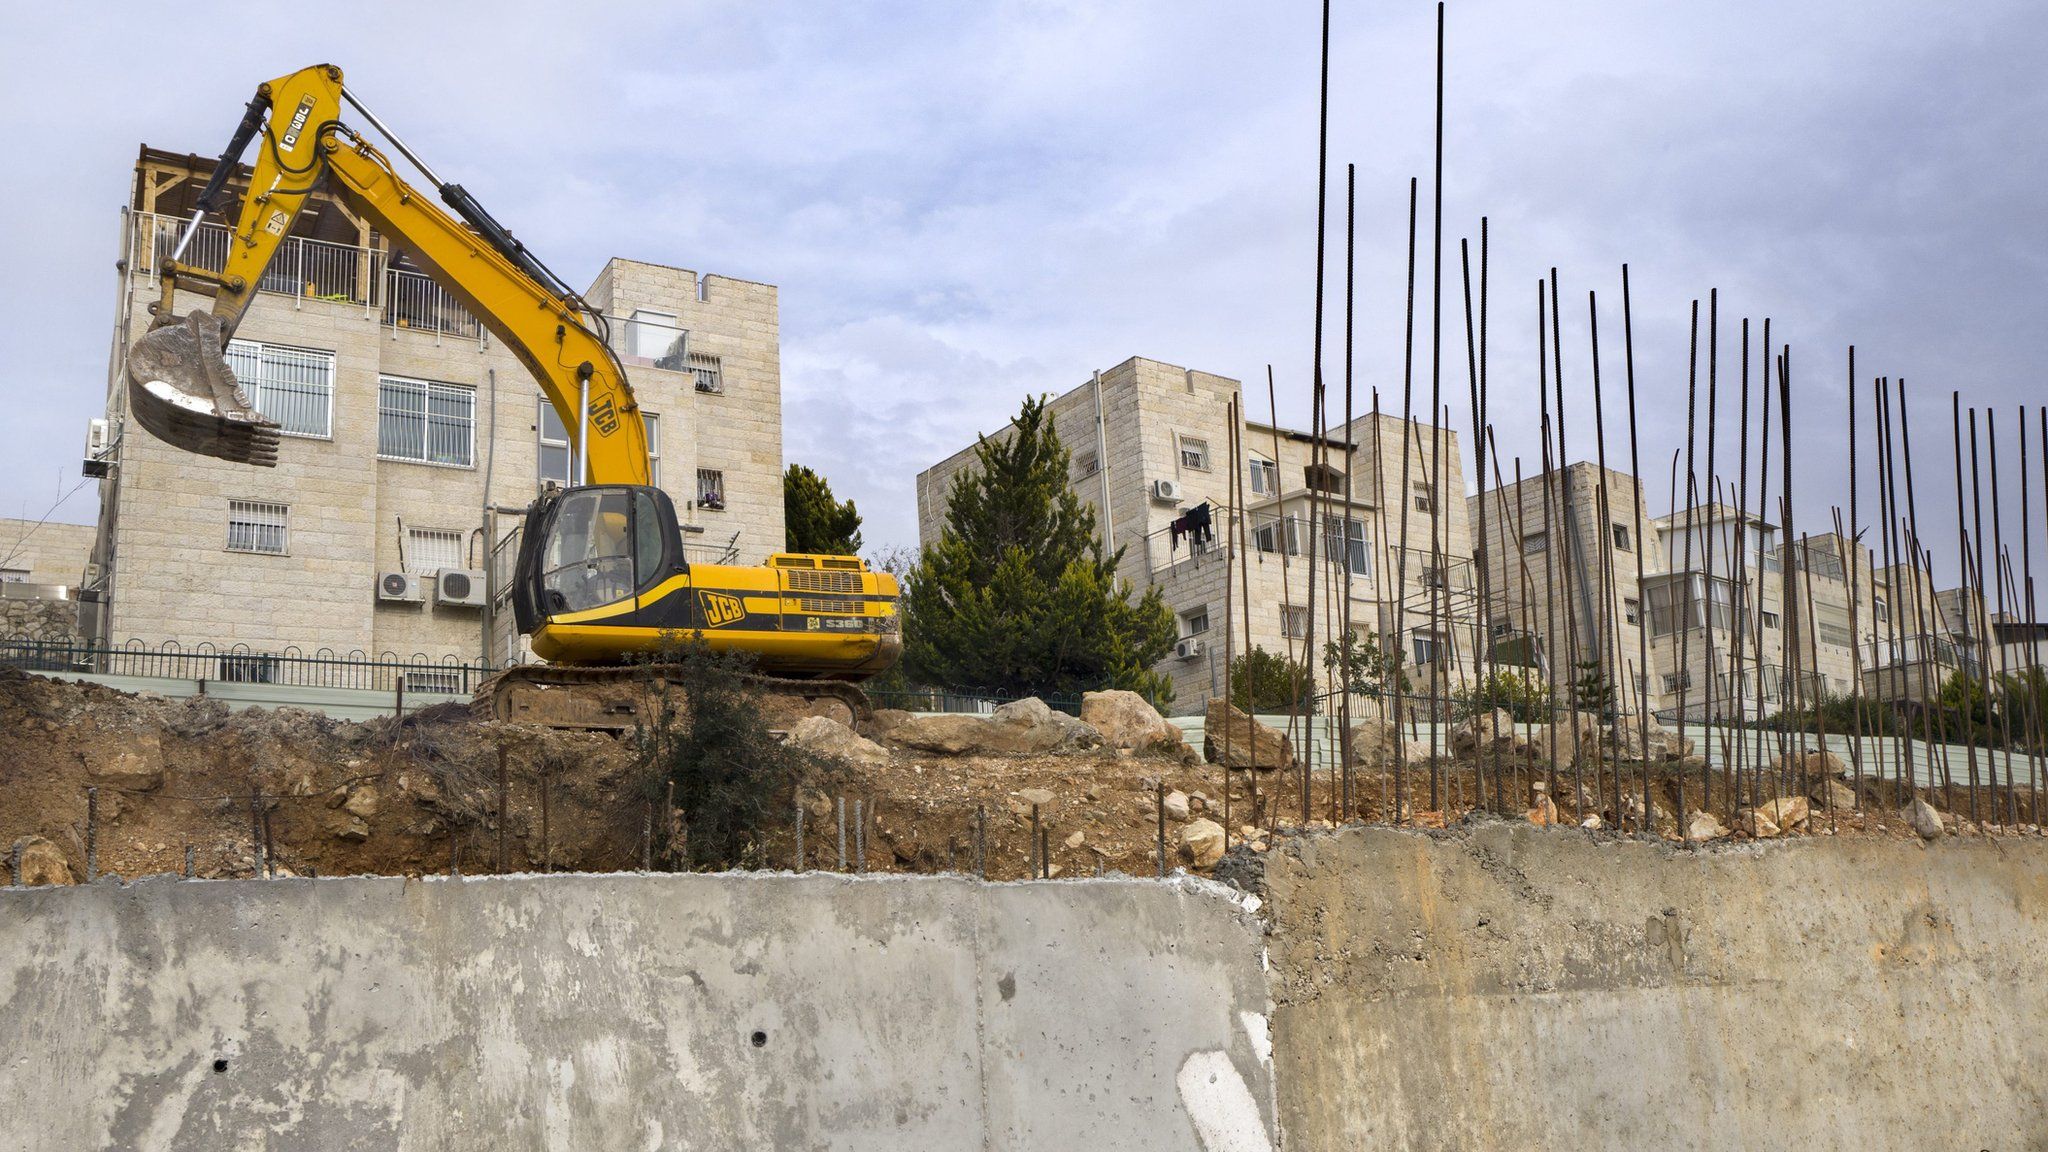 Earth moving equipment stands in the disputed Israeli "settlement" of Ramat Shlomo, 23 December 2016